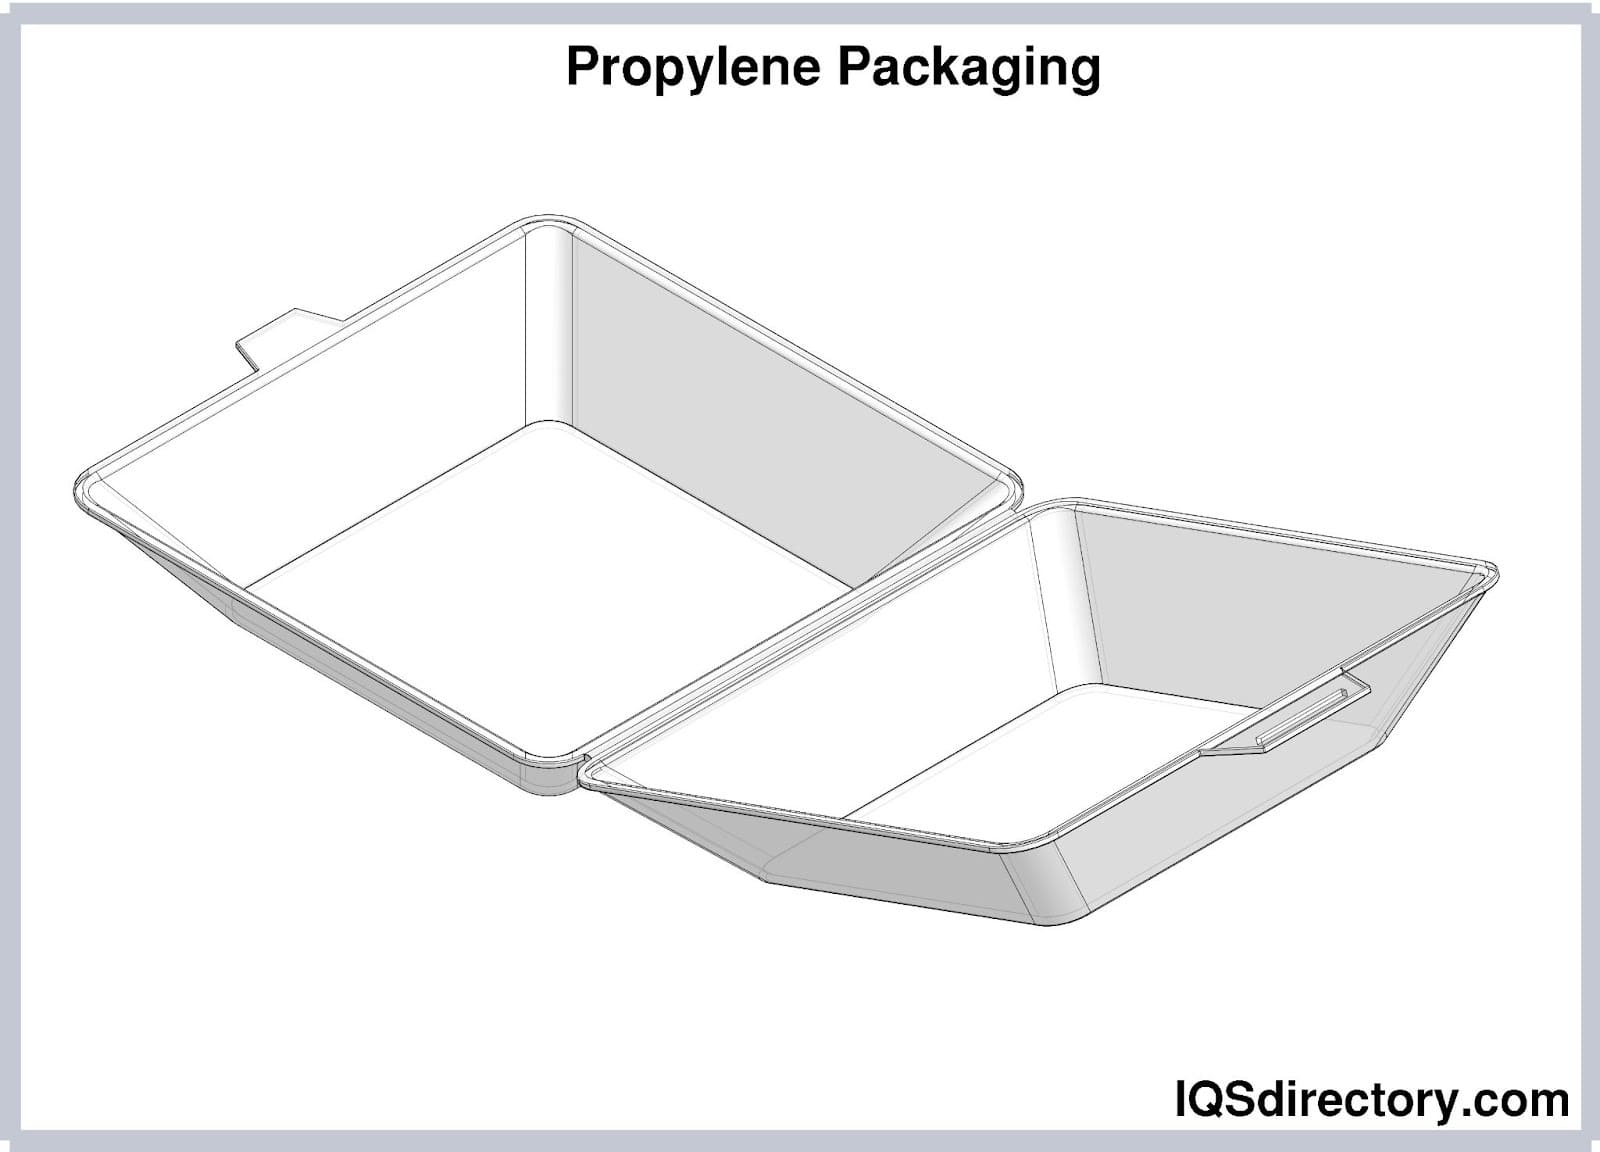 Propylene Packaging